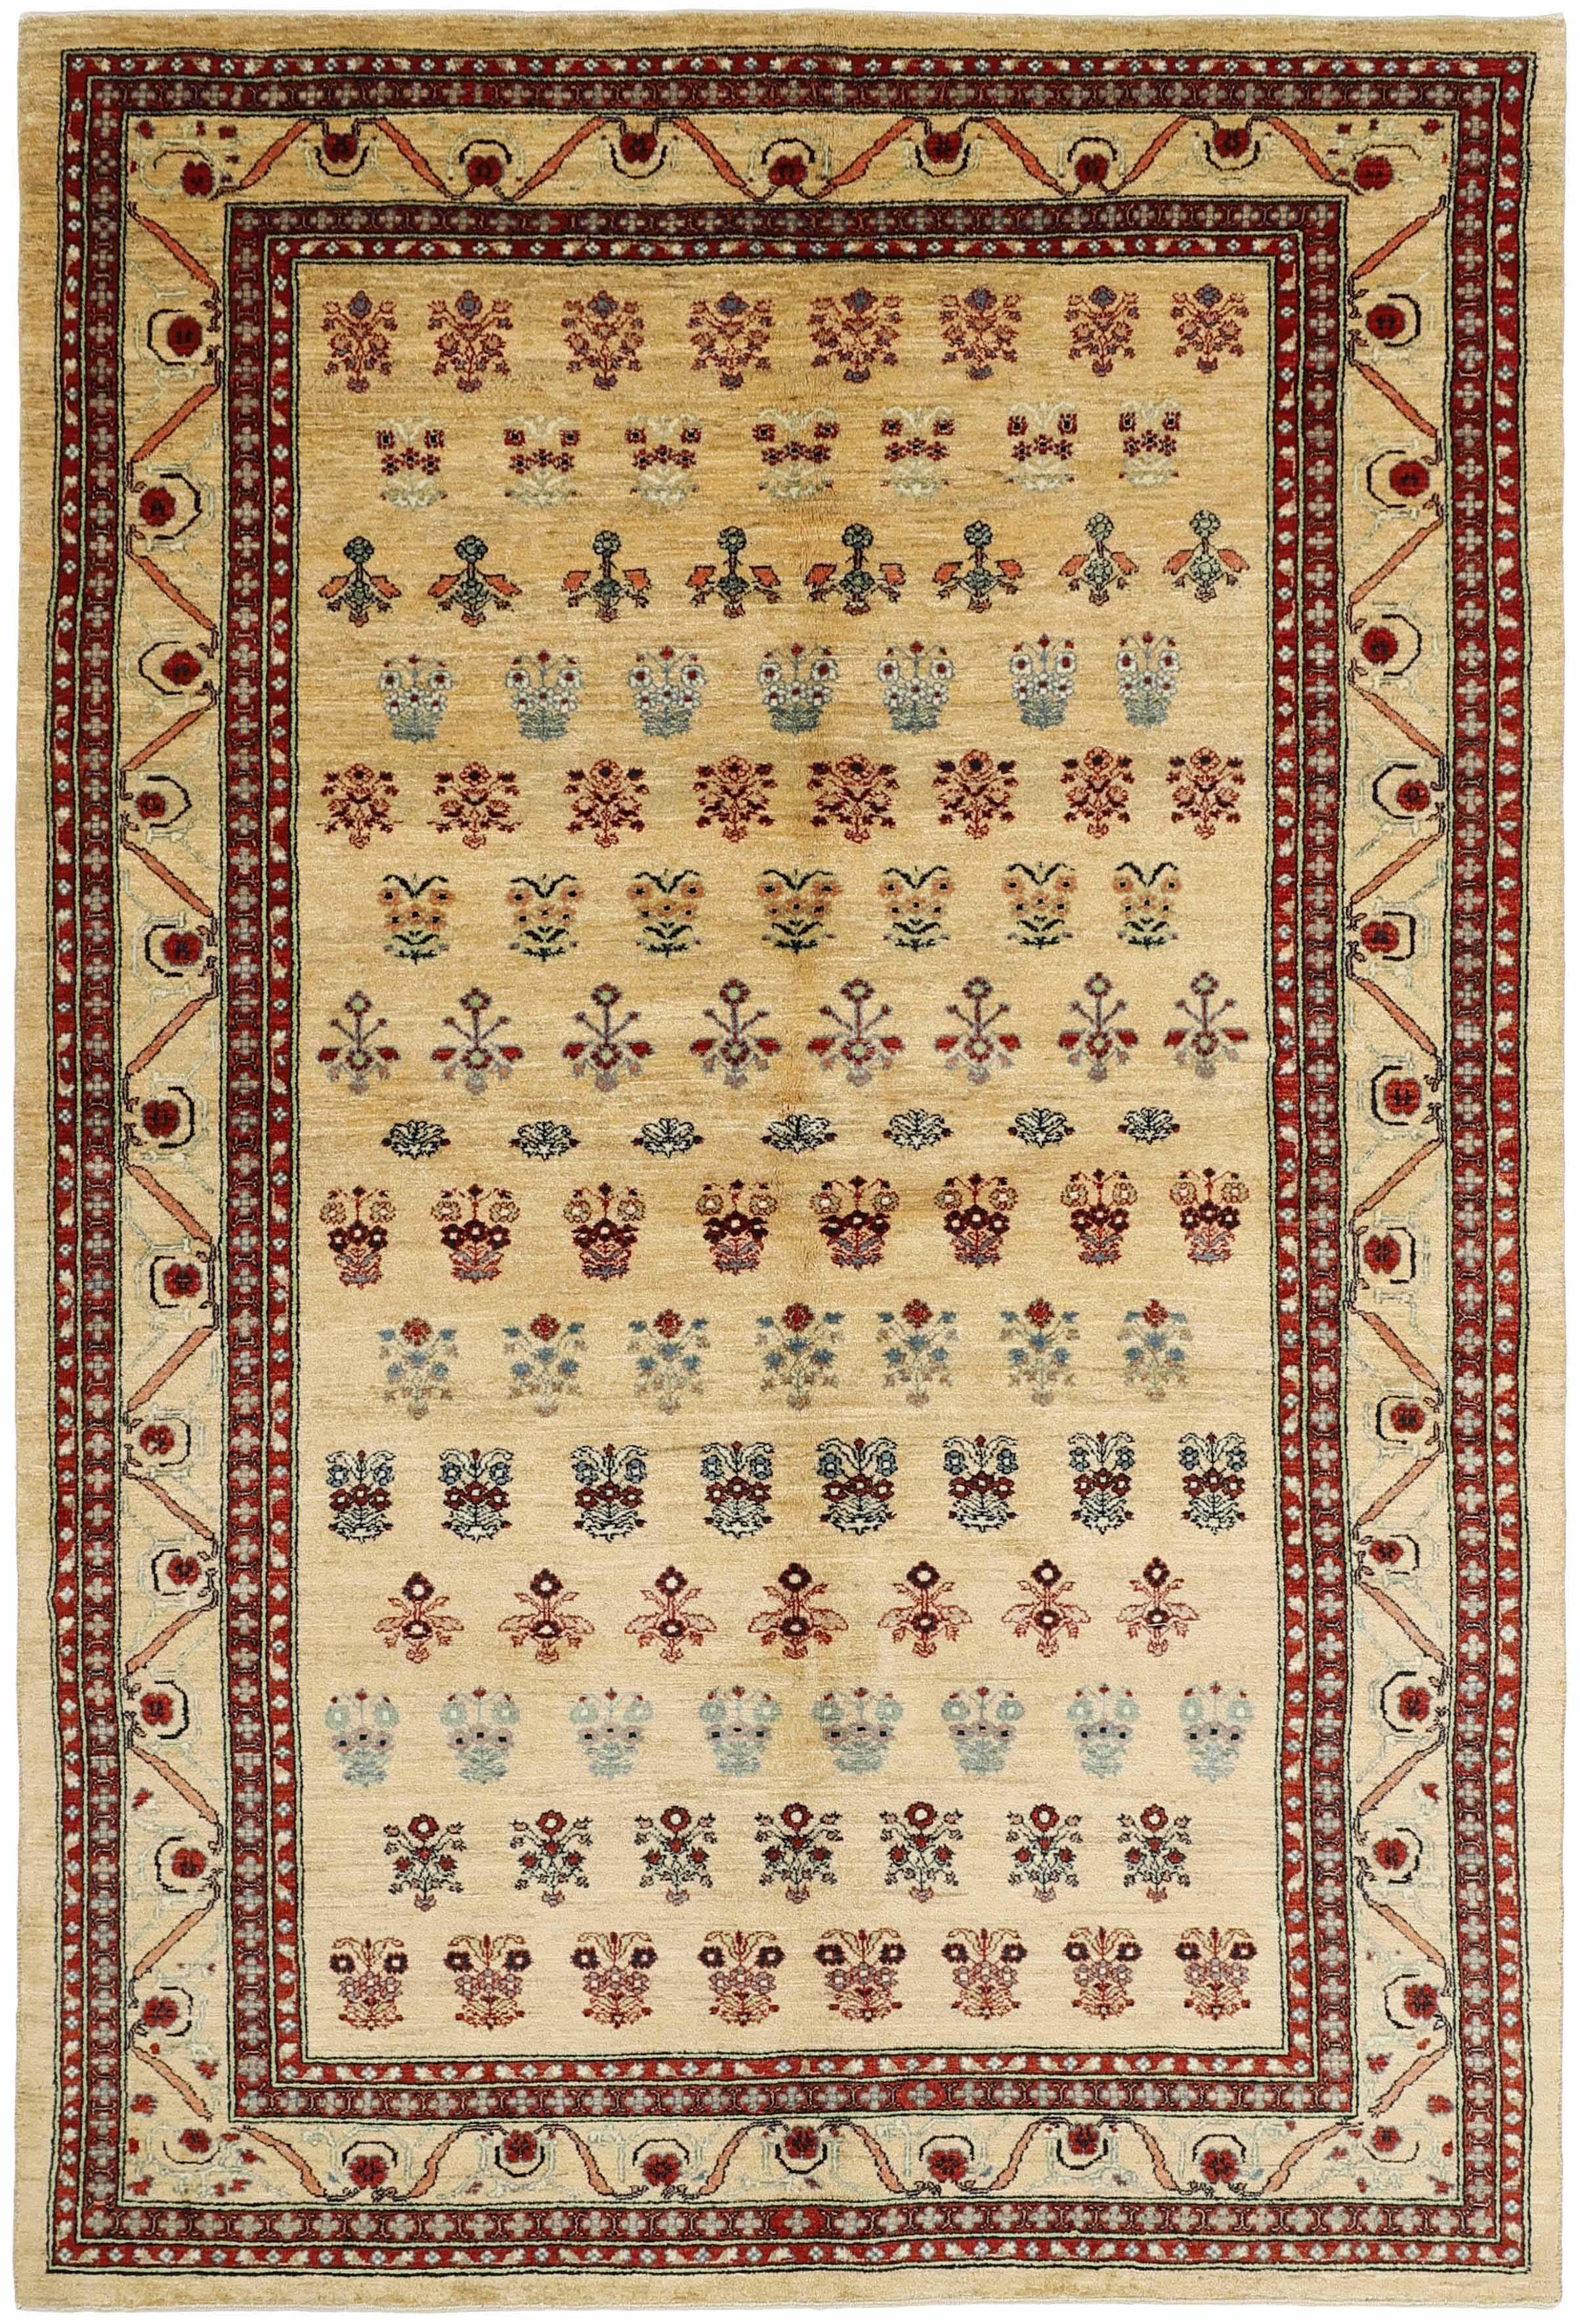 Beige Persian rug with tribal geometric design